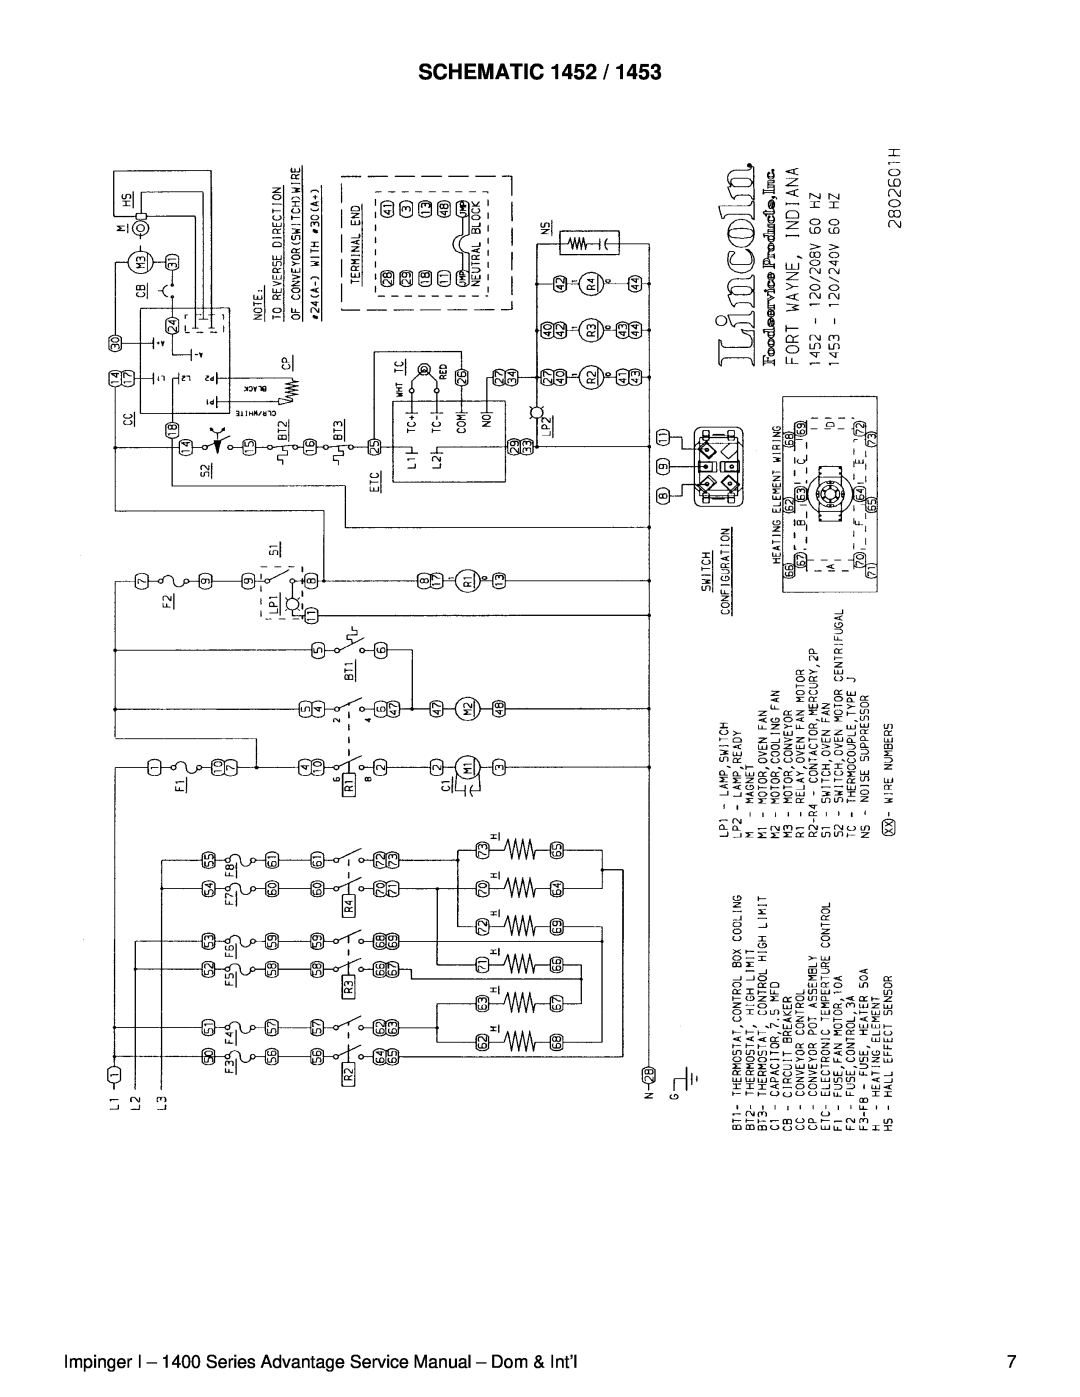 Lincoln service manual Schematic, Impinger I - 1400 Series Advantage Service Manual - Dom & Int’l 